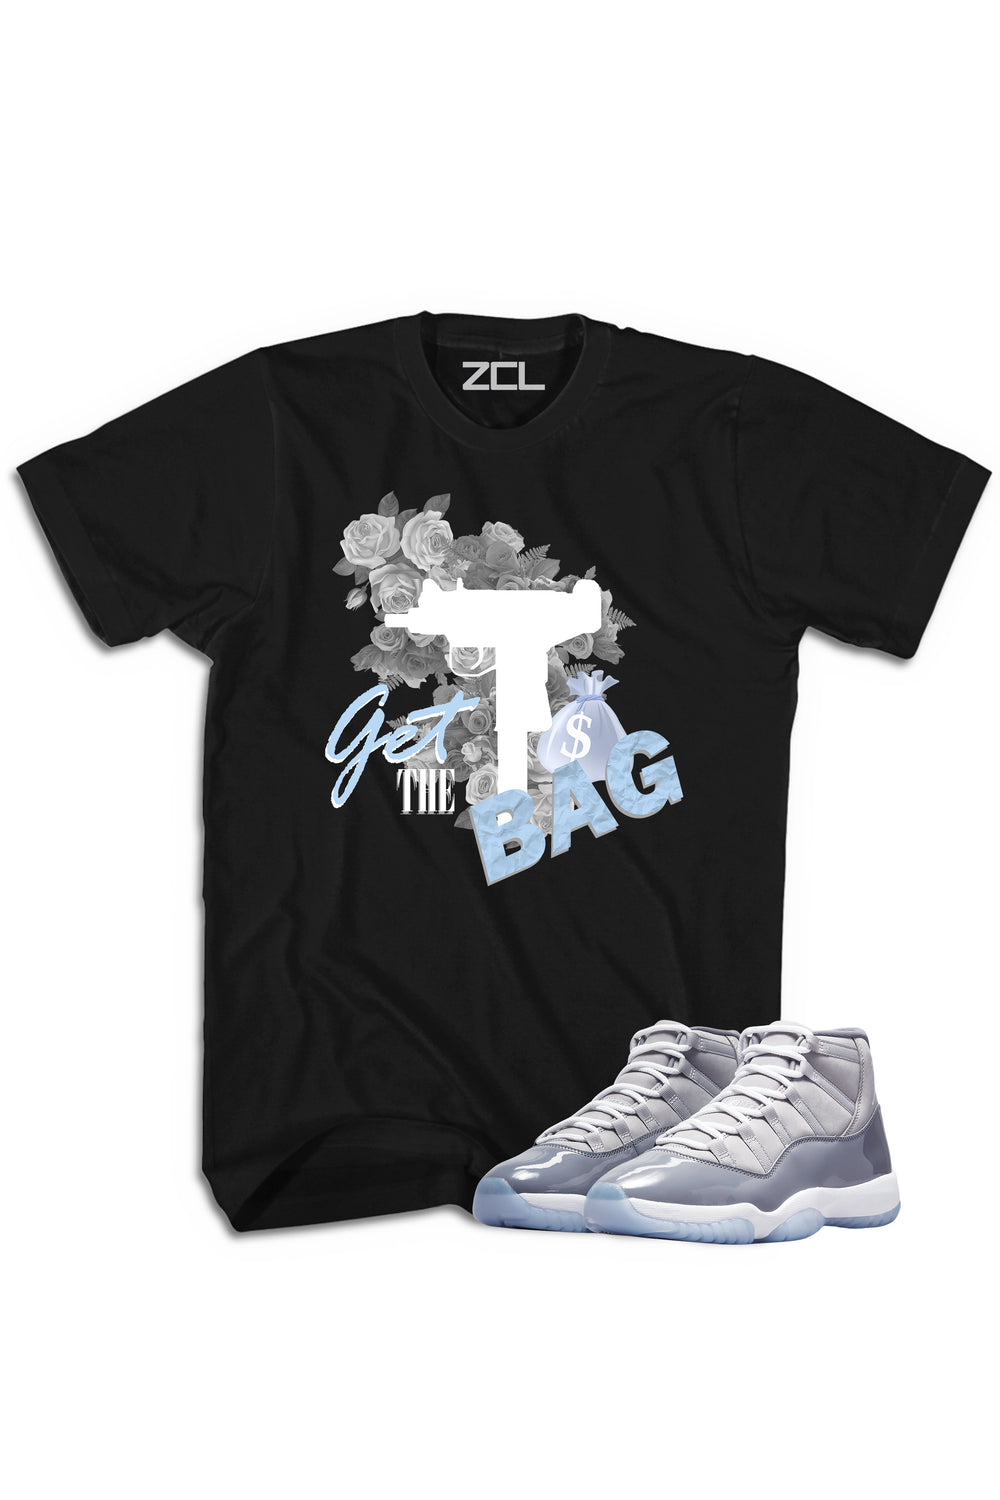 Air Jordan 11 "Get The Bag" Tee Cool Grey - Zamage